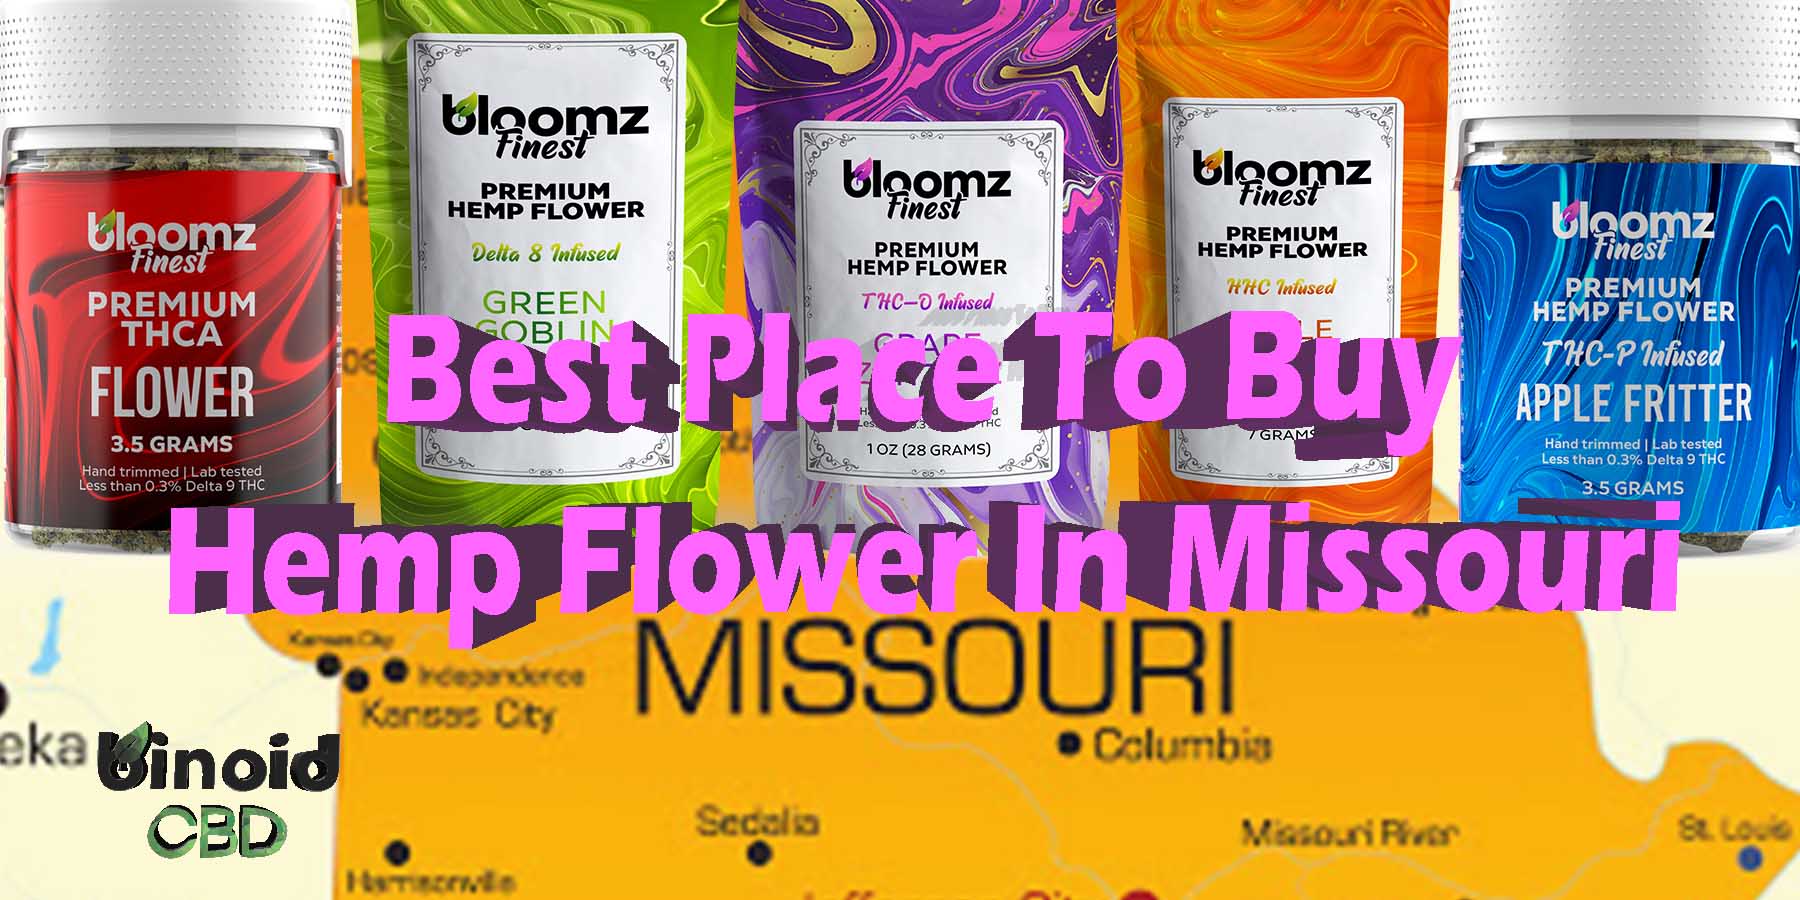 Buy Hemp Flower Missouri Rolls Get Online Near Me For Sale Best Brand Strongest Real Legal Store Shop Reddit